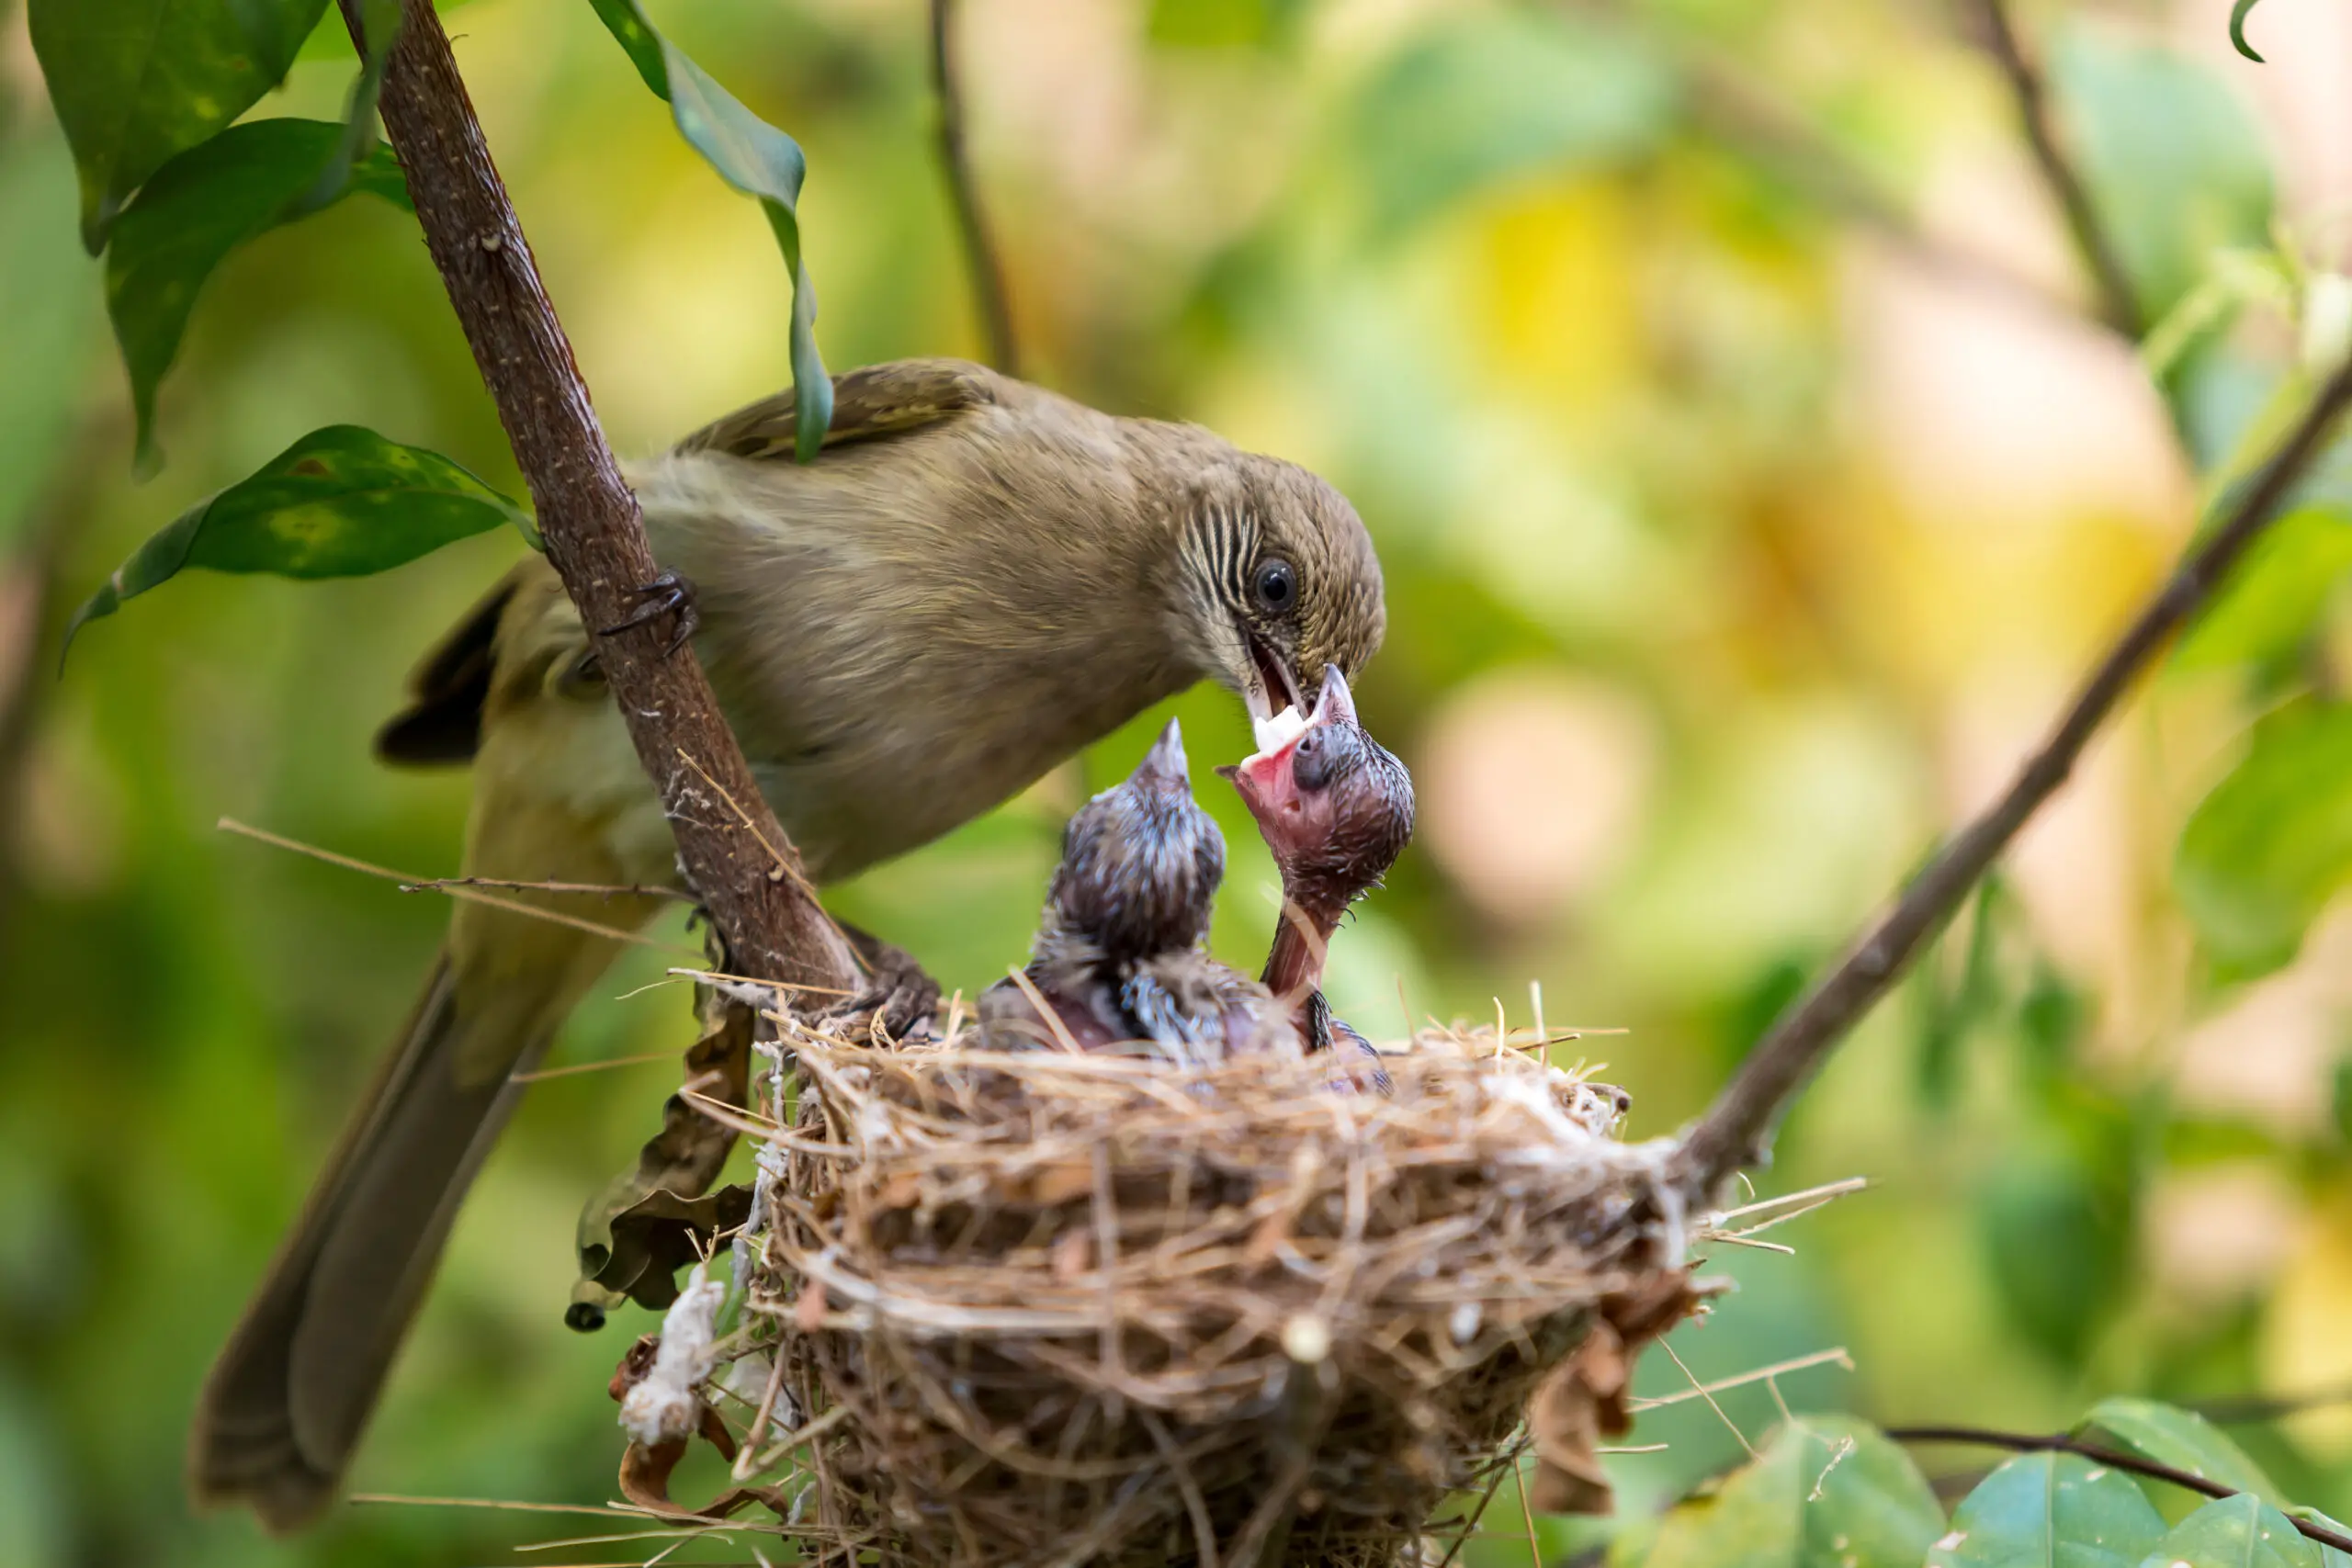 Mother bird feeding her newborn baby on nest in the tree. Close up